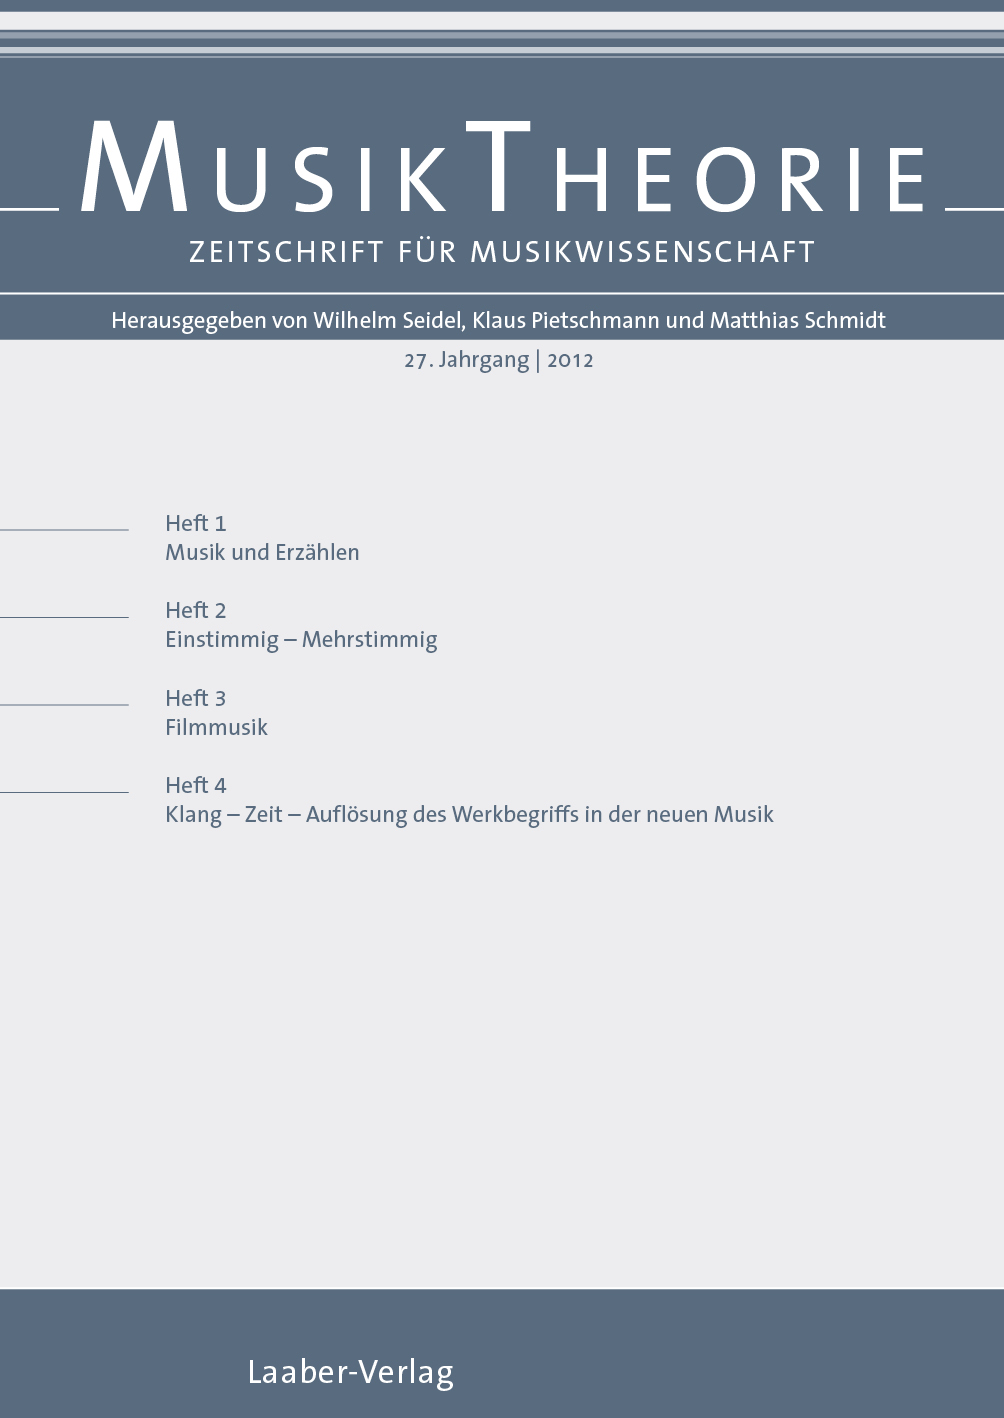 Musiktheorie 2012 (27. Jahrgang)